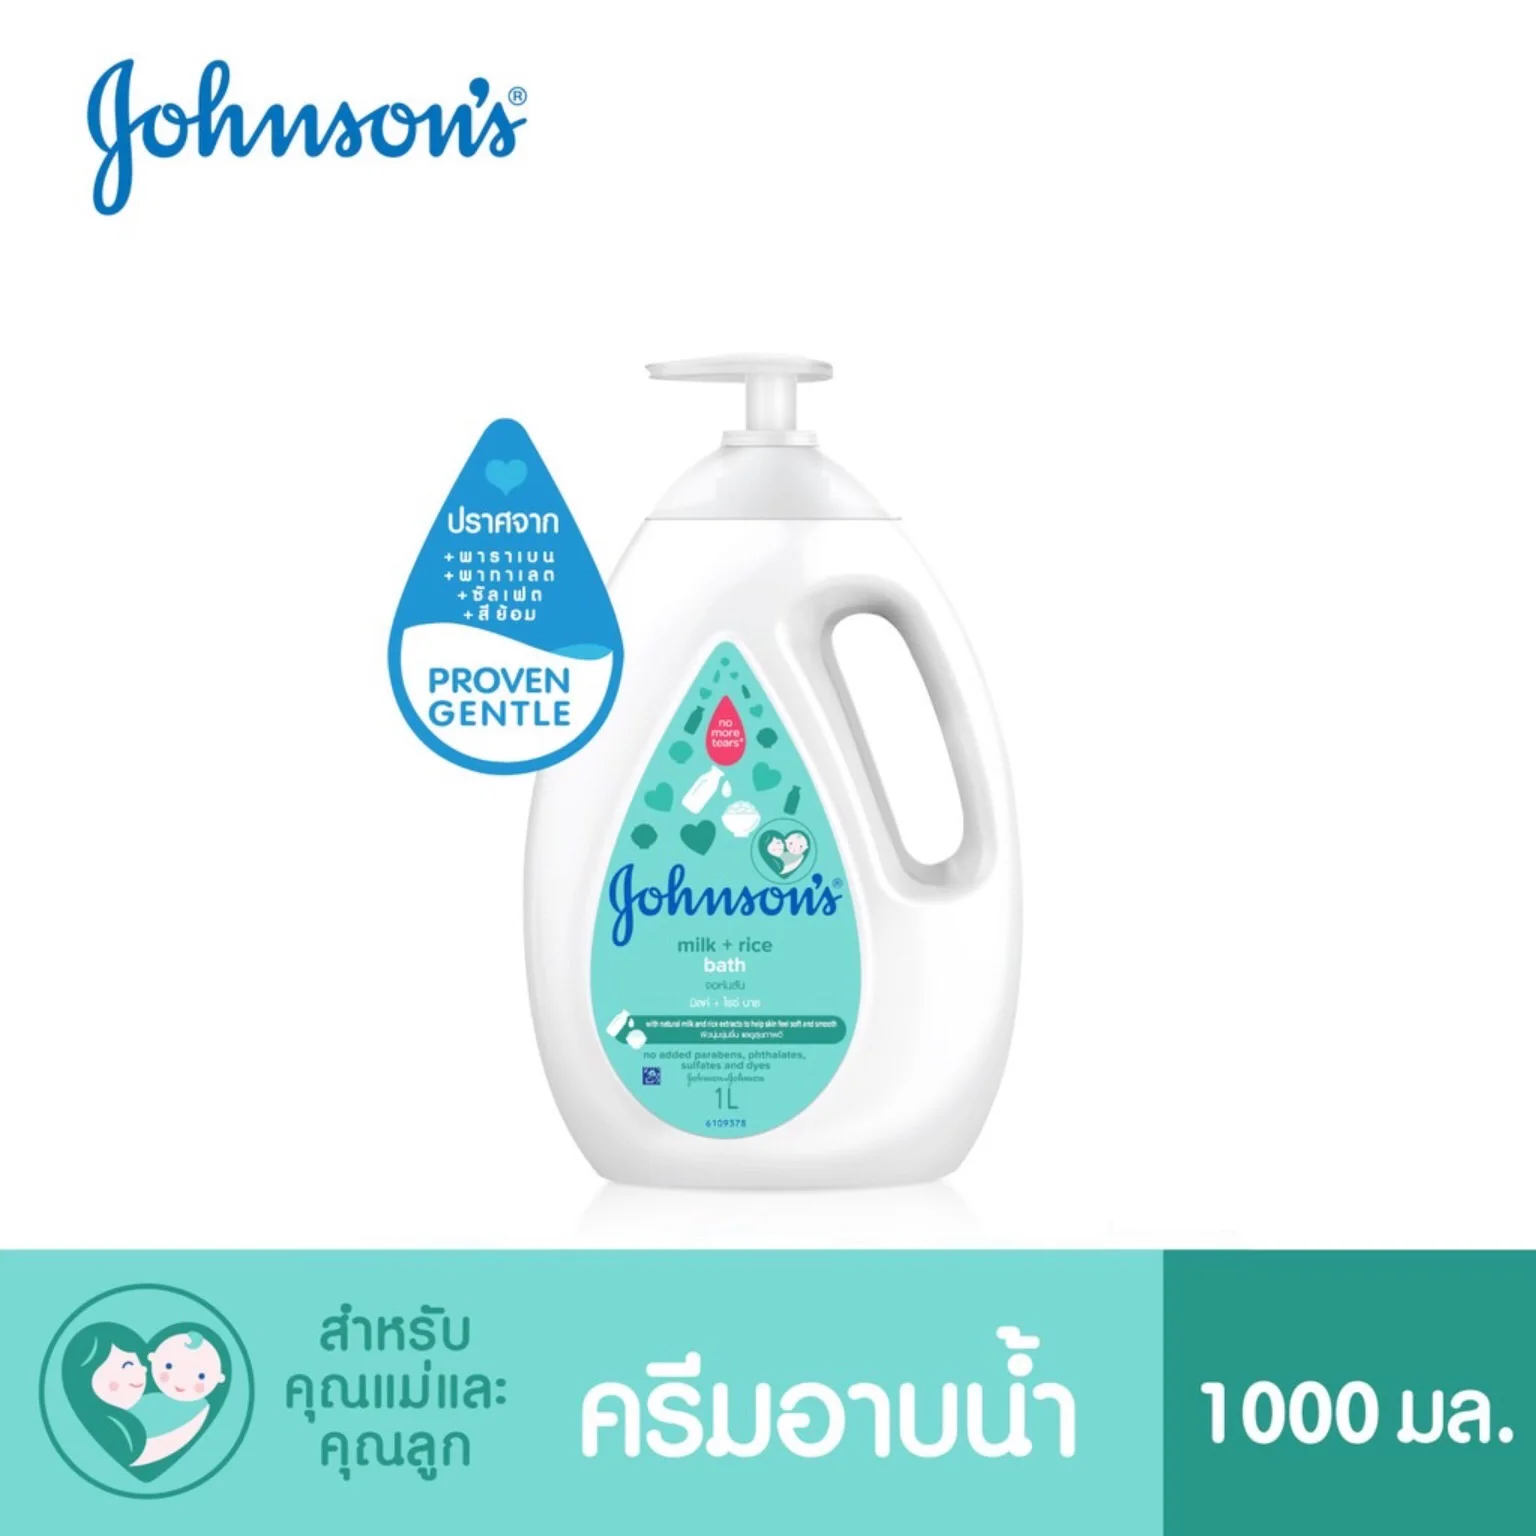 Johnson Milk+Rice Bath 1000 ml. จอห์นสัน มิลค์ + ไรซ์ บาธ 1000 มล.